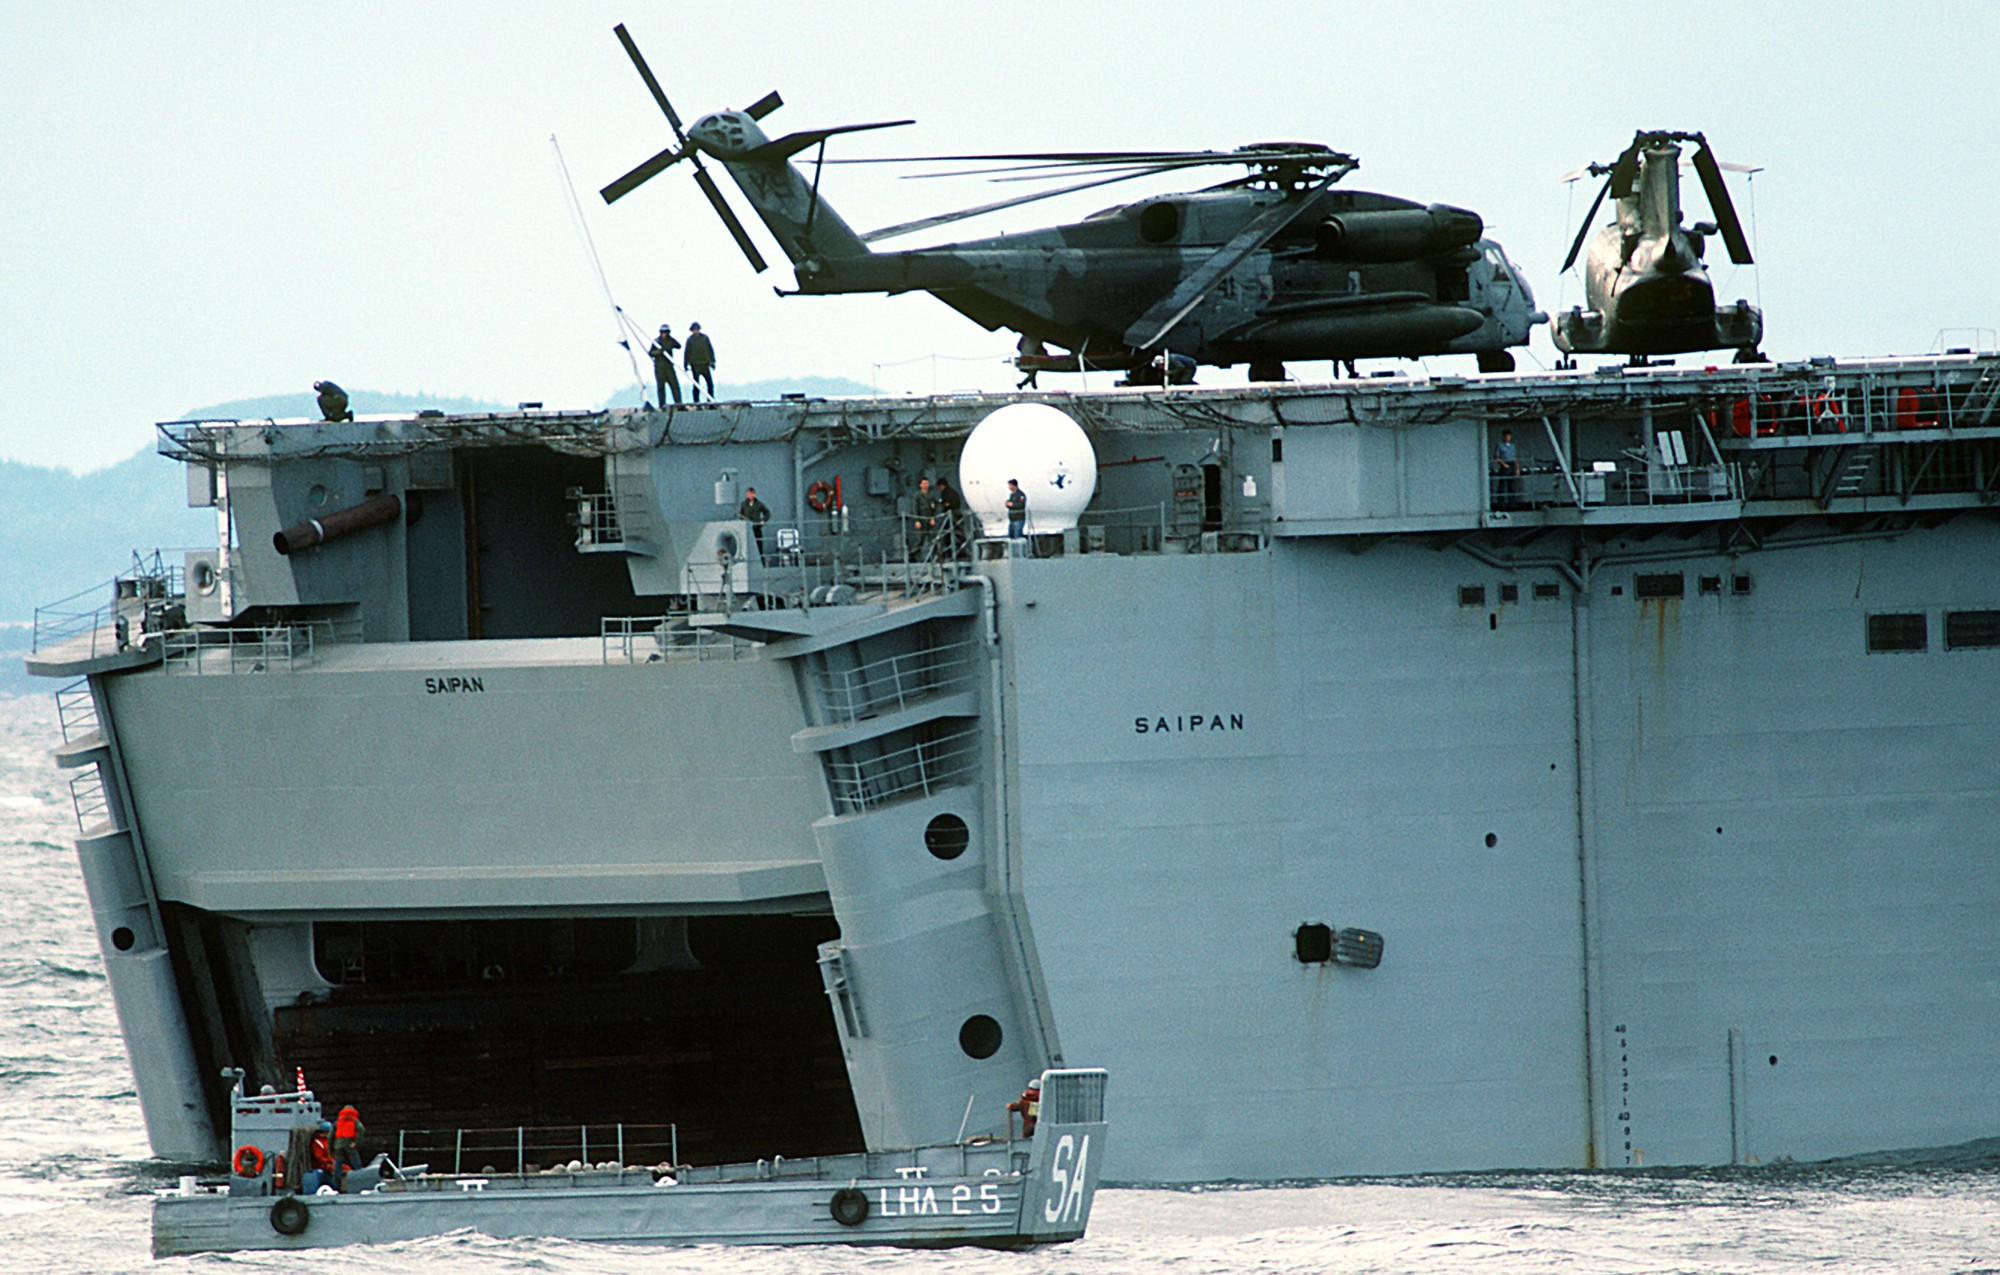 lha-2 uss saipan tarawa class amphibious assault ship us navy 22nd mau hmm-162 usmc nato exercise northern wedding 53